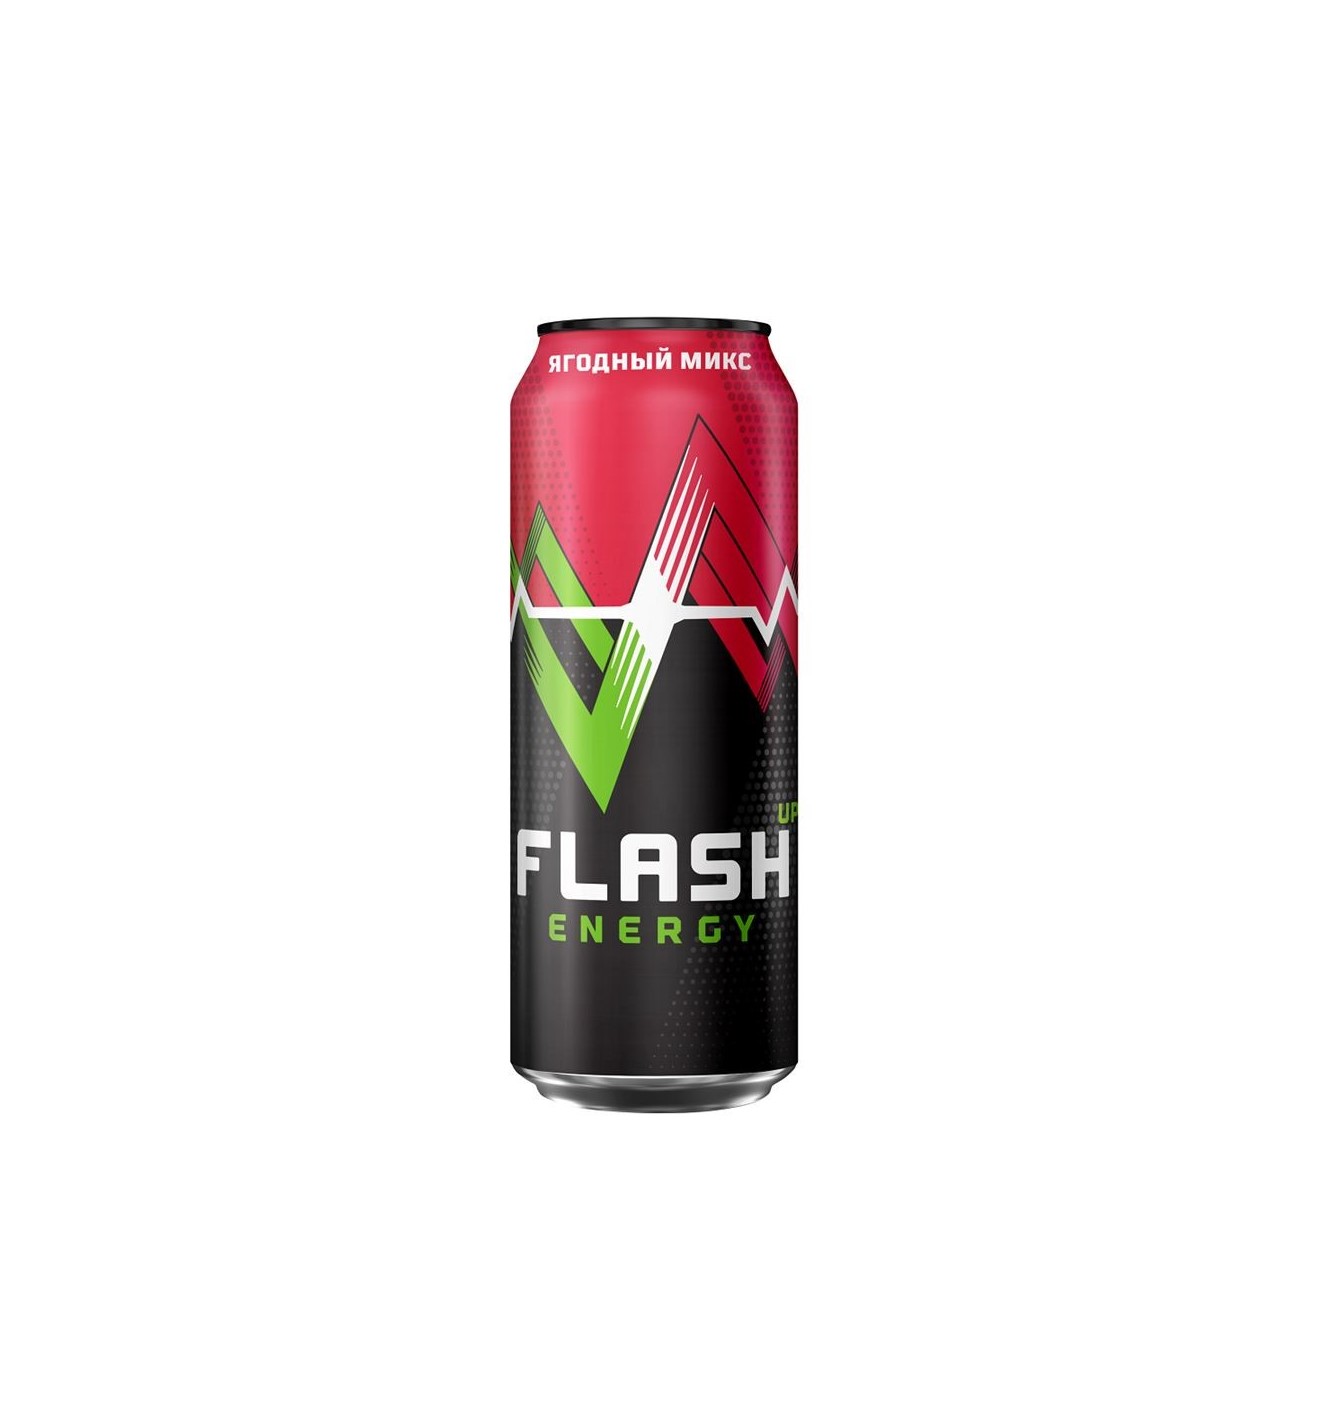 Flash mix. Flash up Energy 0,45. Напиток энергетический флэш ап Энерджи 0,45л ж/б. Flash энергетический напиток. Энергетик флаш Энерджи 0,5л пластик.